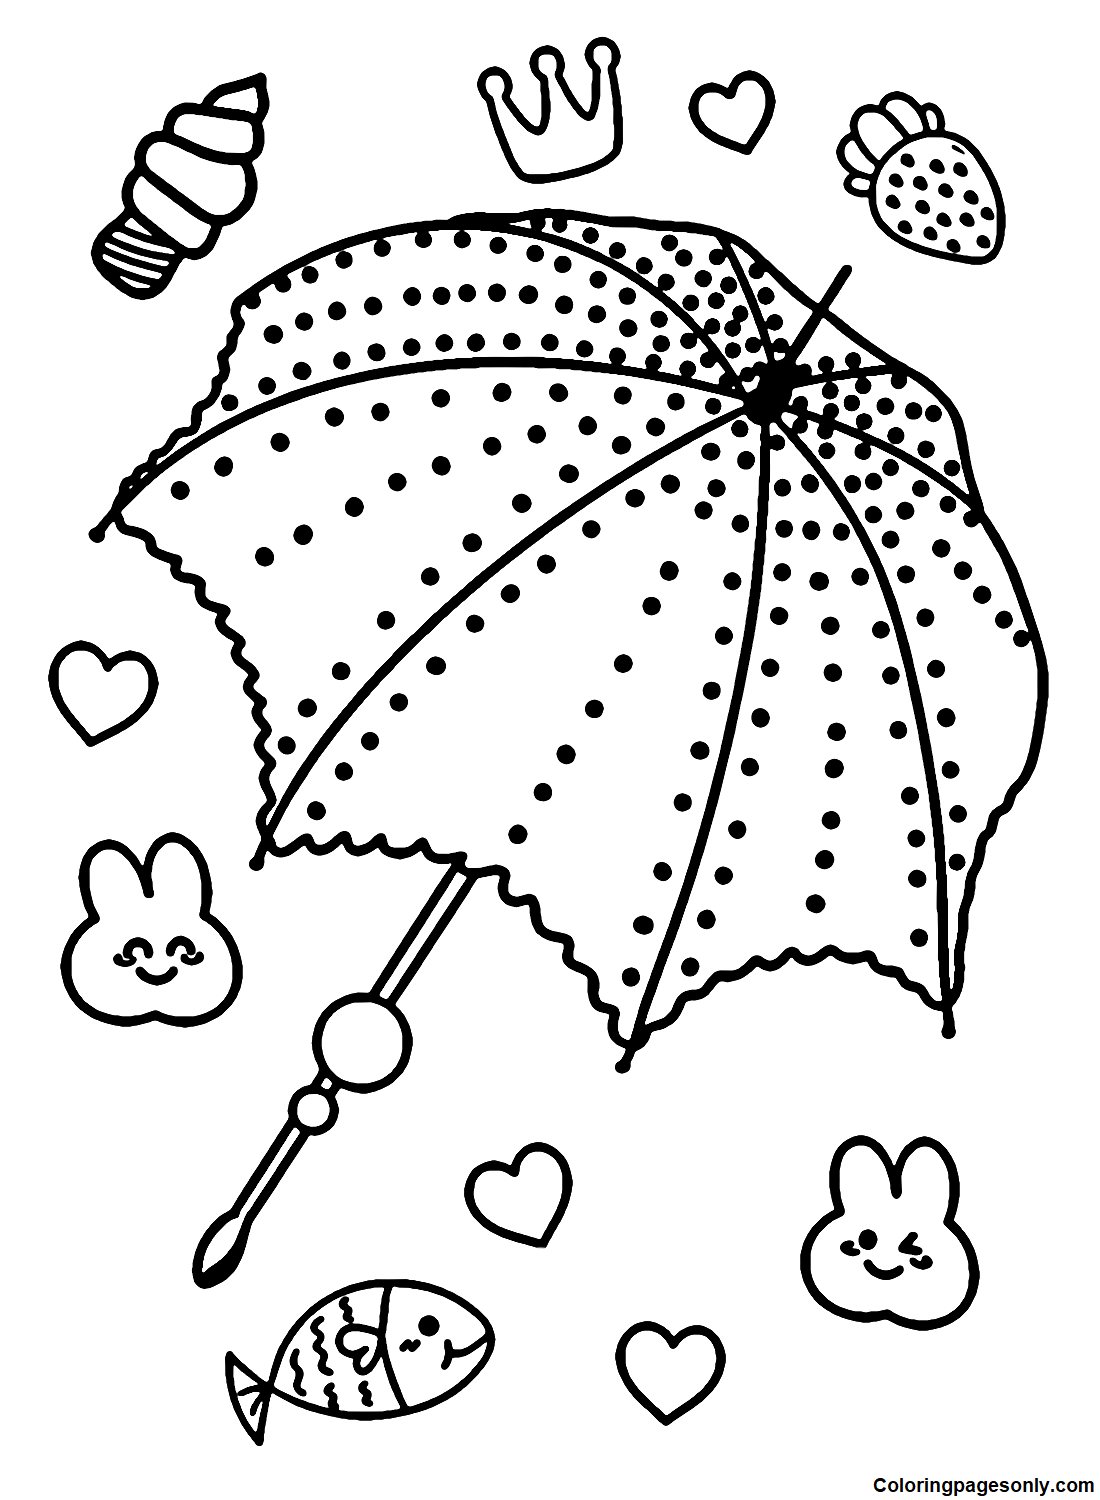 Printable Umbrella from Umbrella